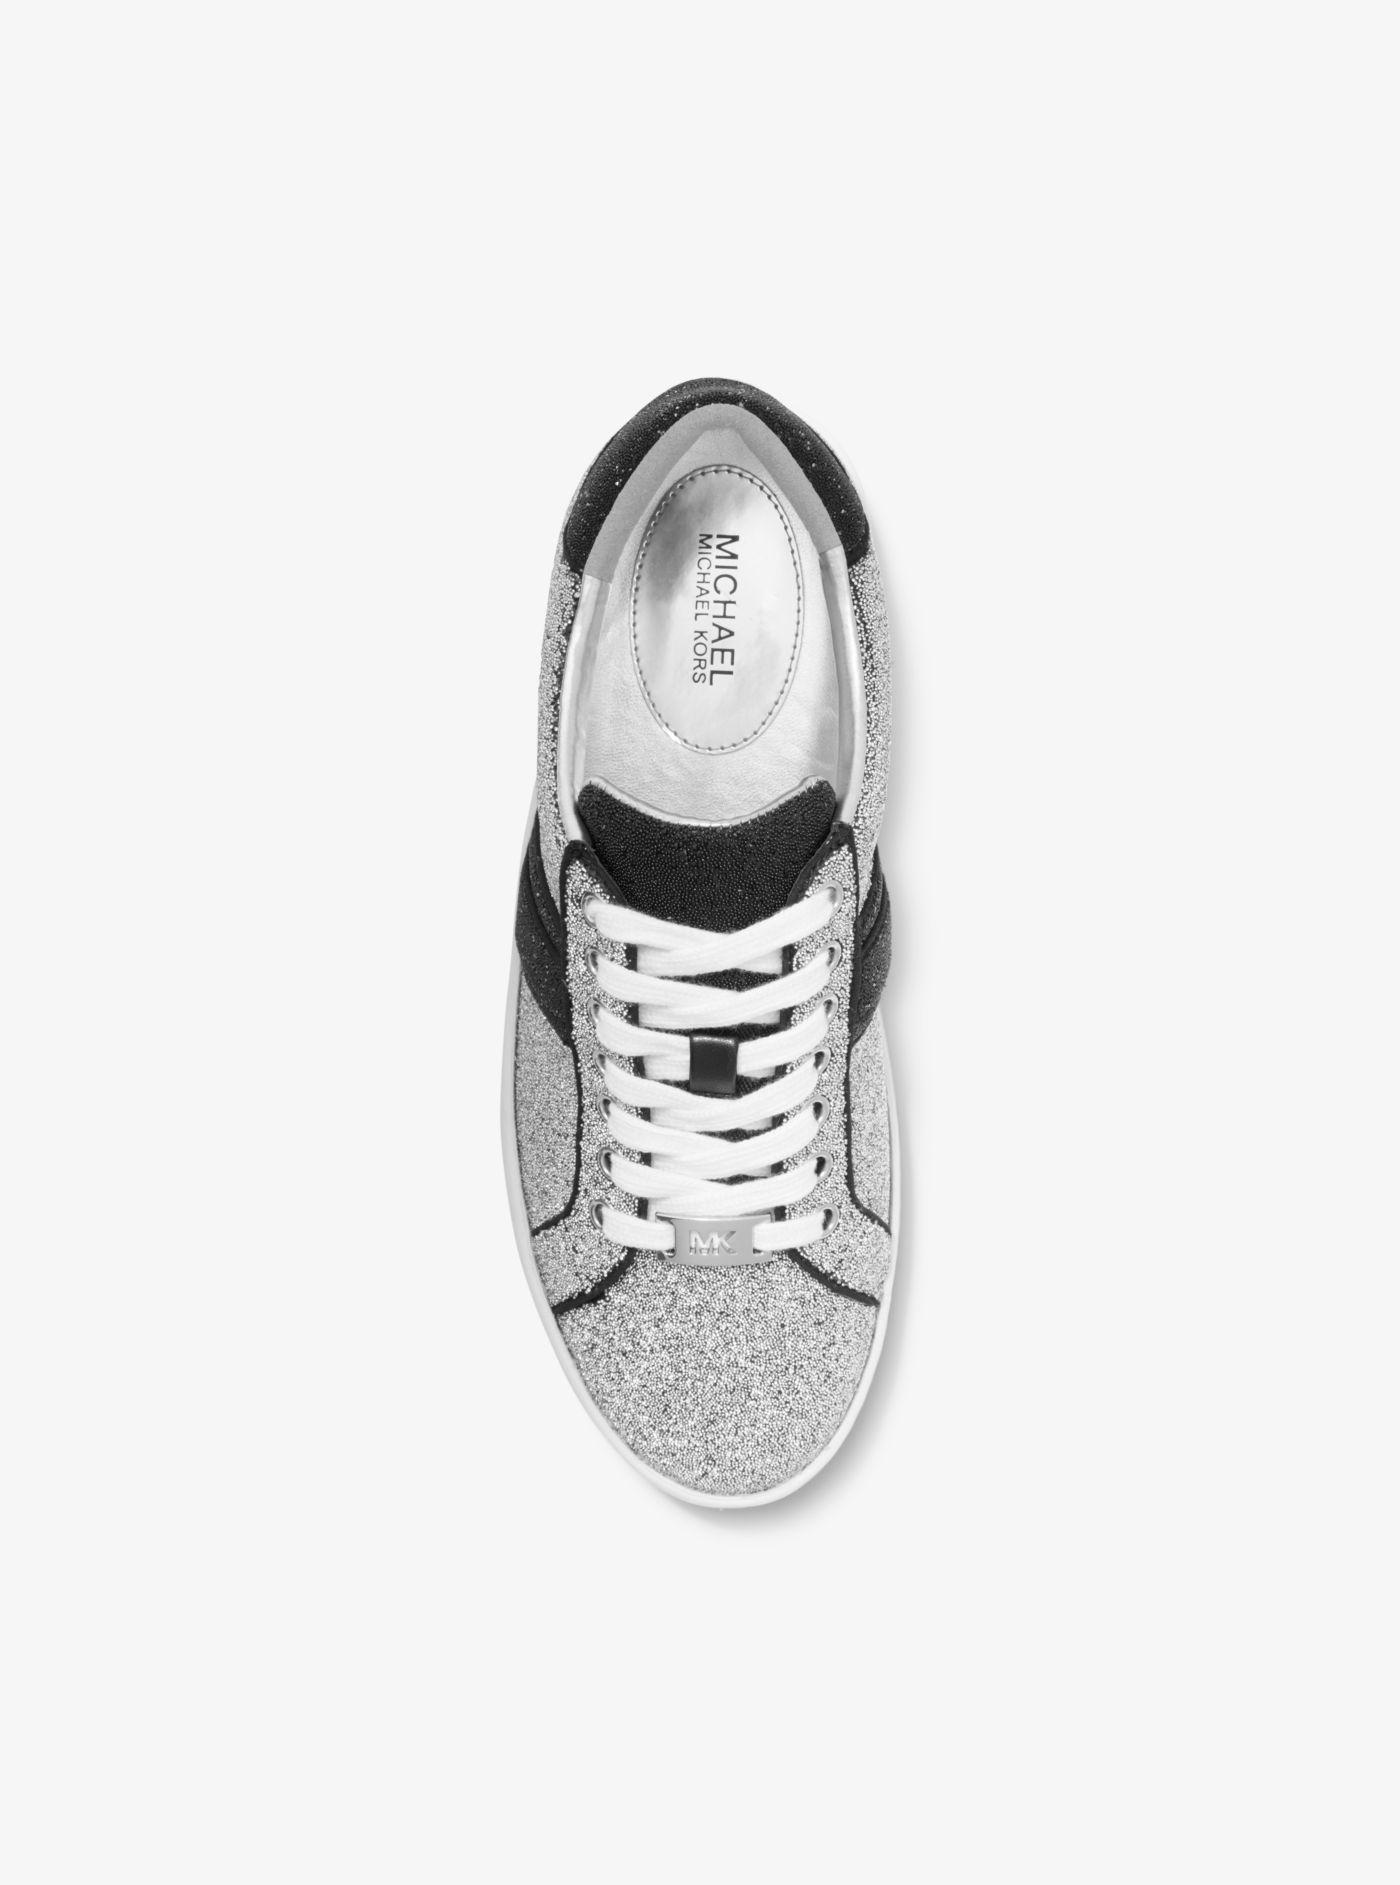 Michael Kors Irving Swarovski® Crystal Embellished Canvas Sneaker in Silver  (Metallic) - Lyst